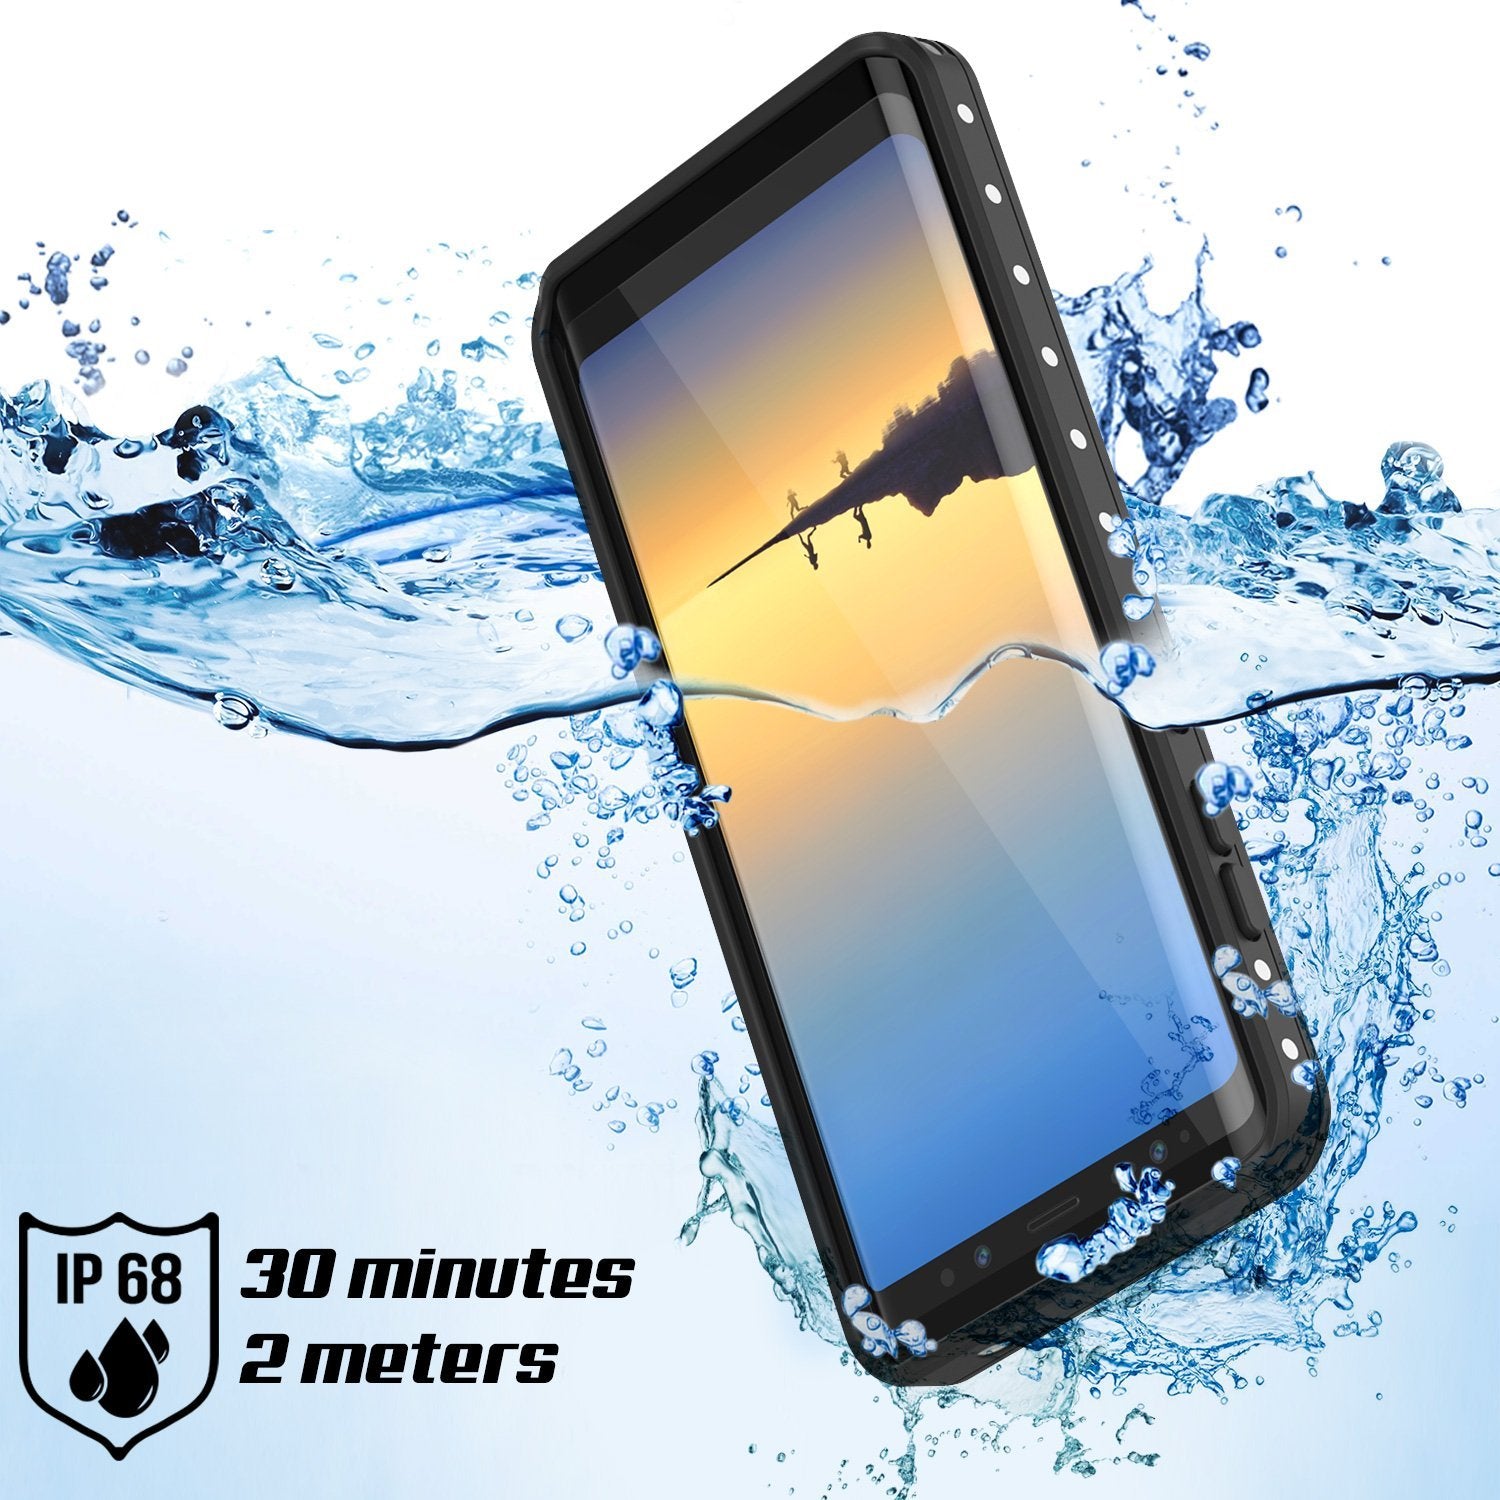 Galaxy Note 8 Waterproof Case, PunkСase StudStar White Thin 6.6ft Underwater IP68 Shock/Snow Proof - PunkCase NZ